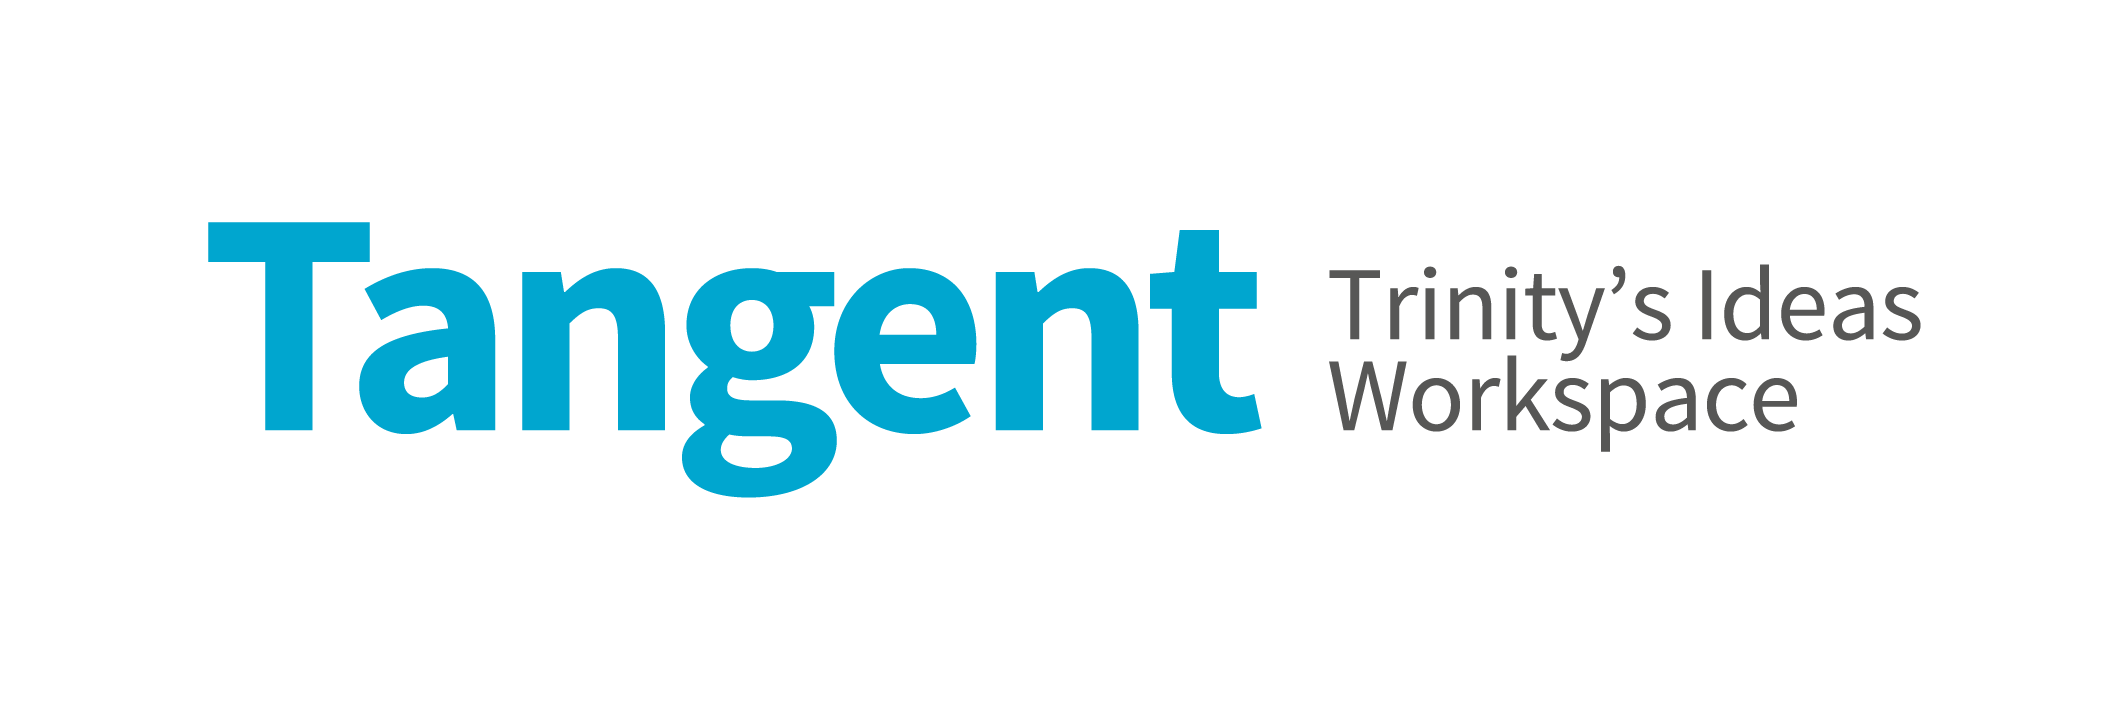 Tangent Logo - Publications & Branding, Trinity's Ideas Workspace